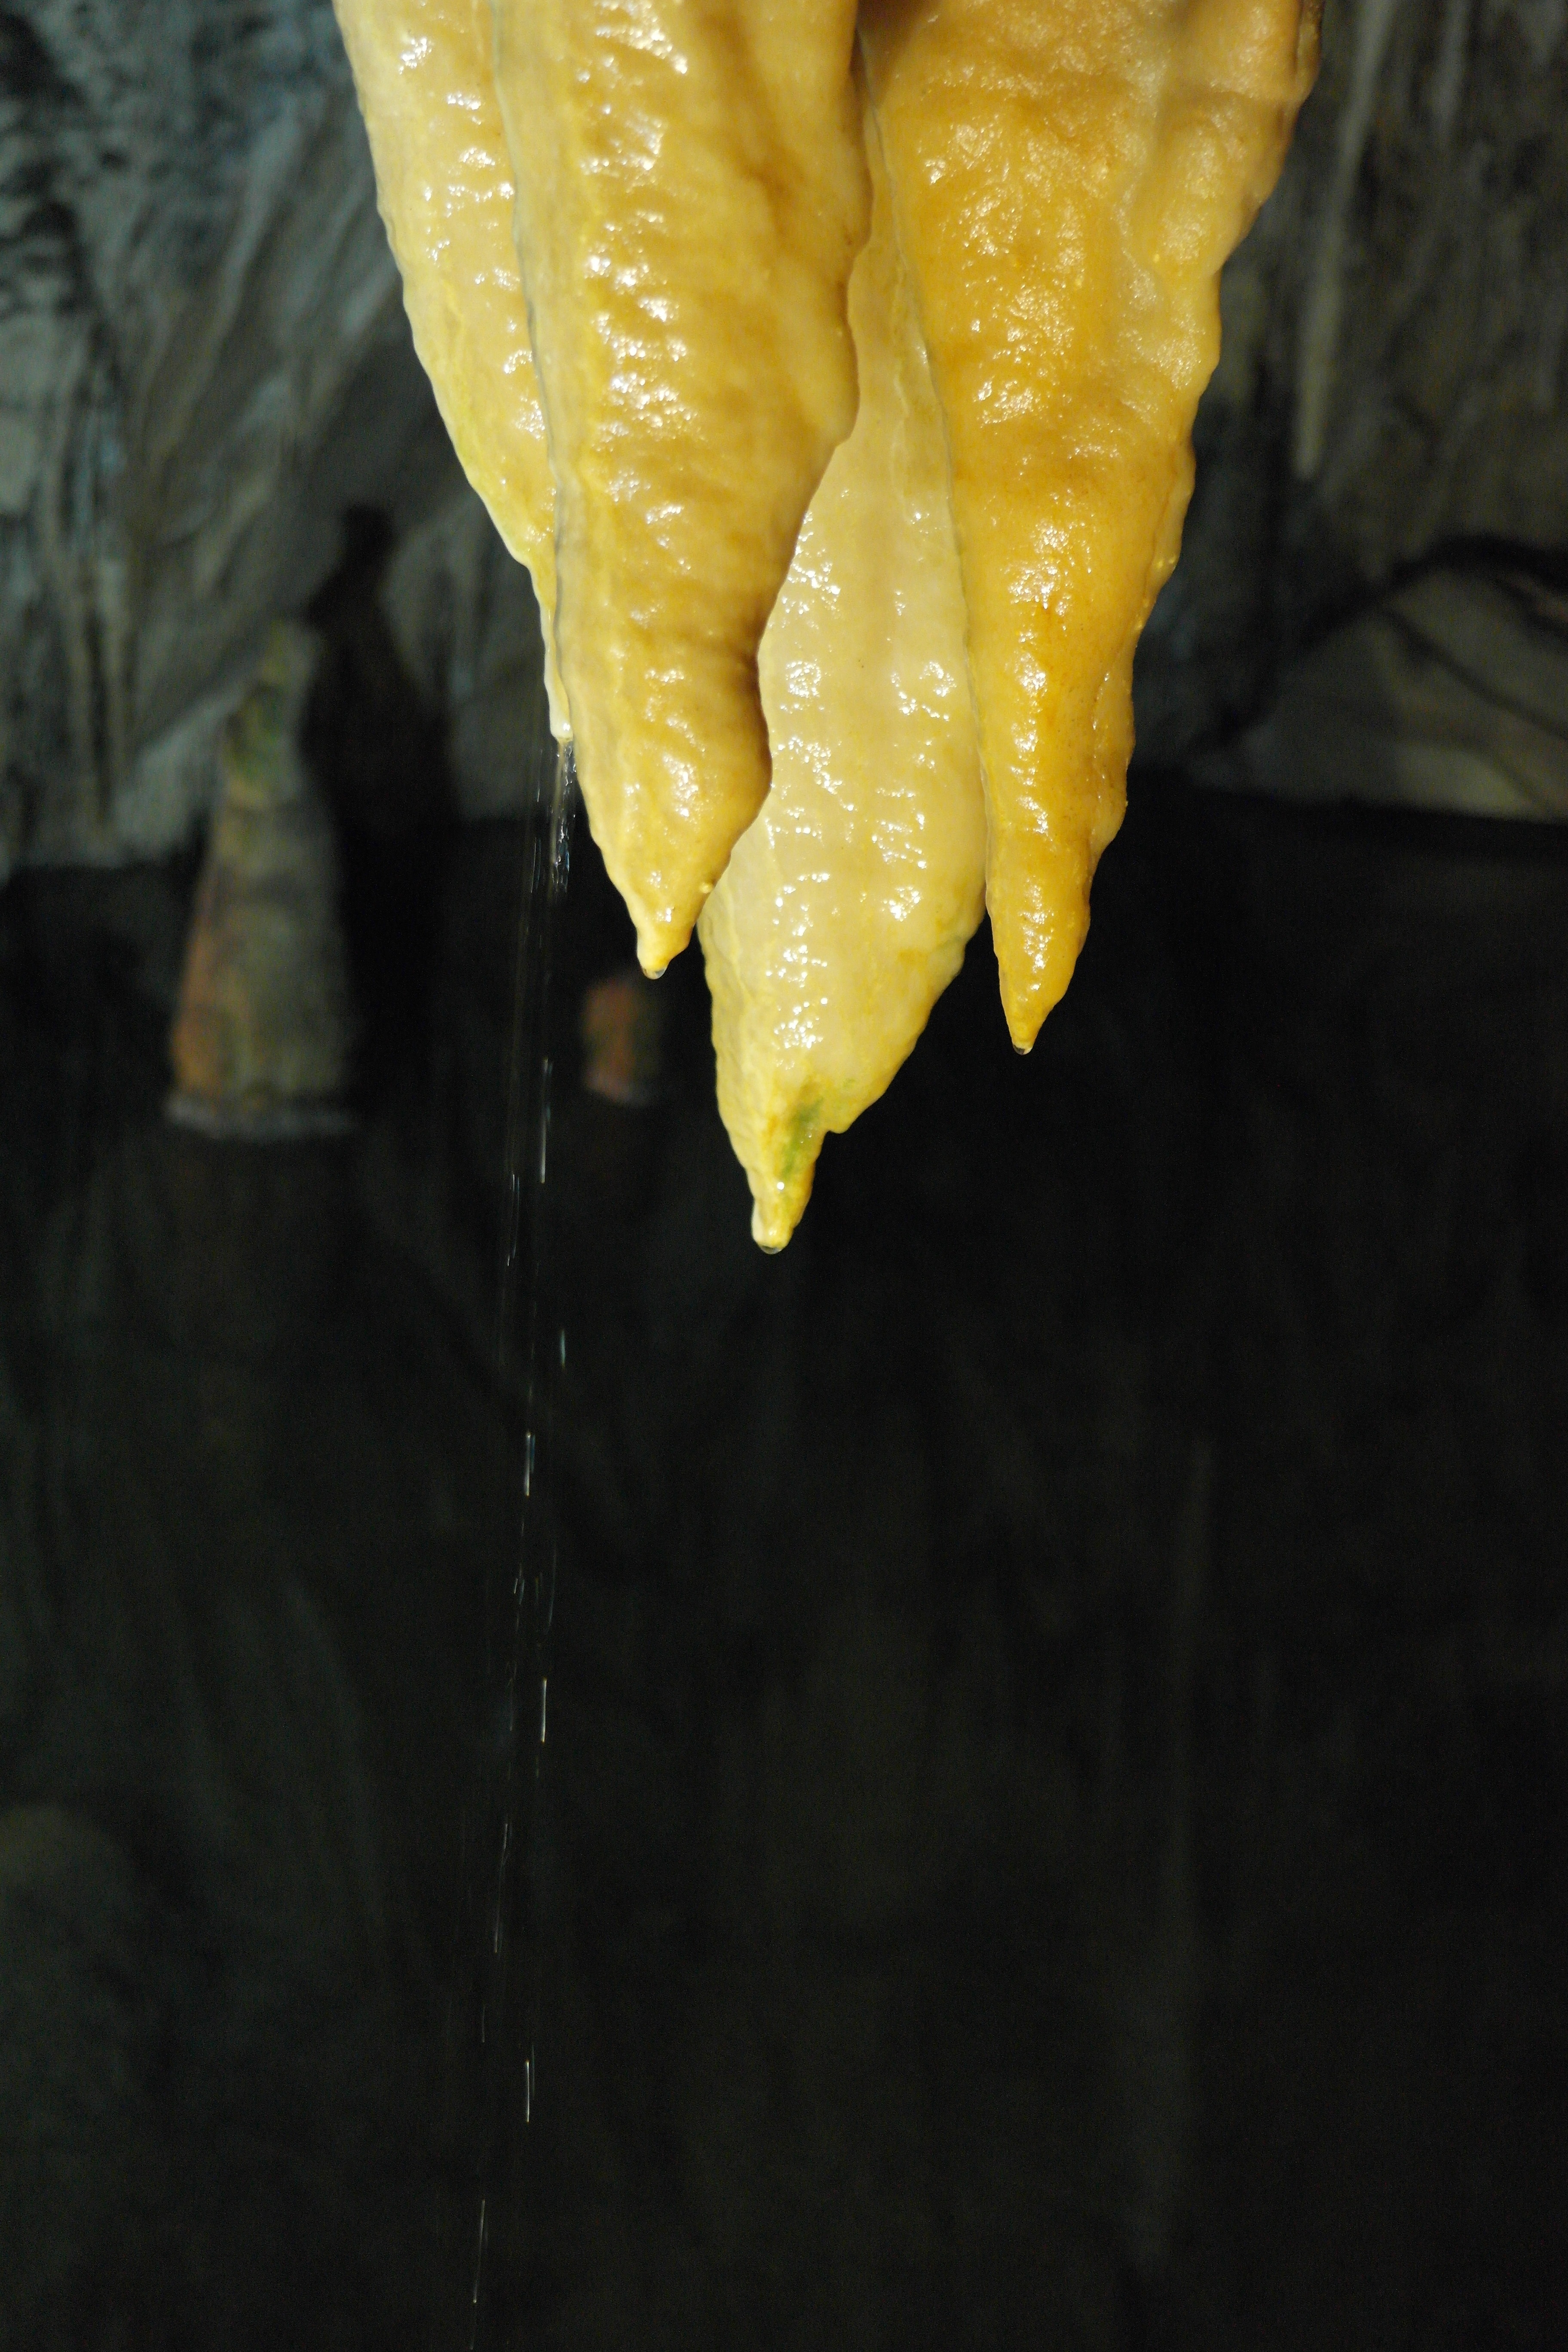 close up photo of yellow fruit